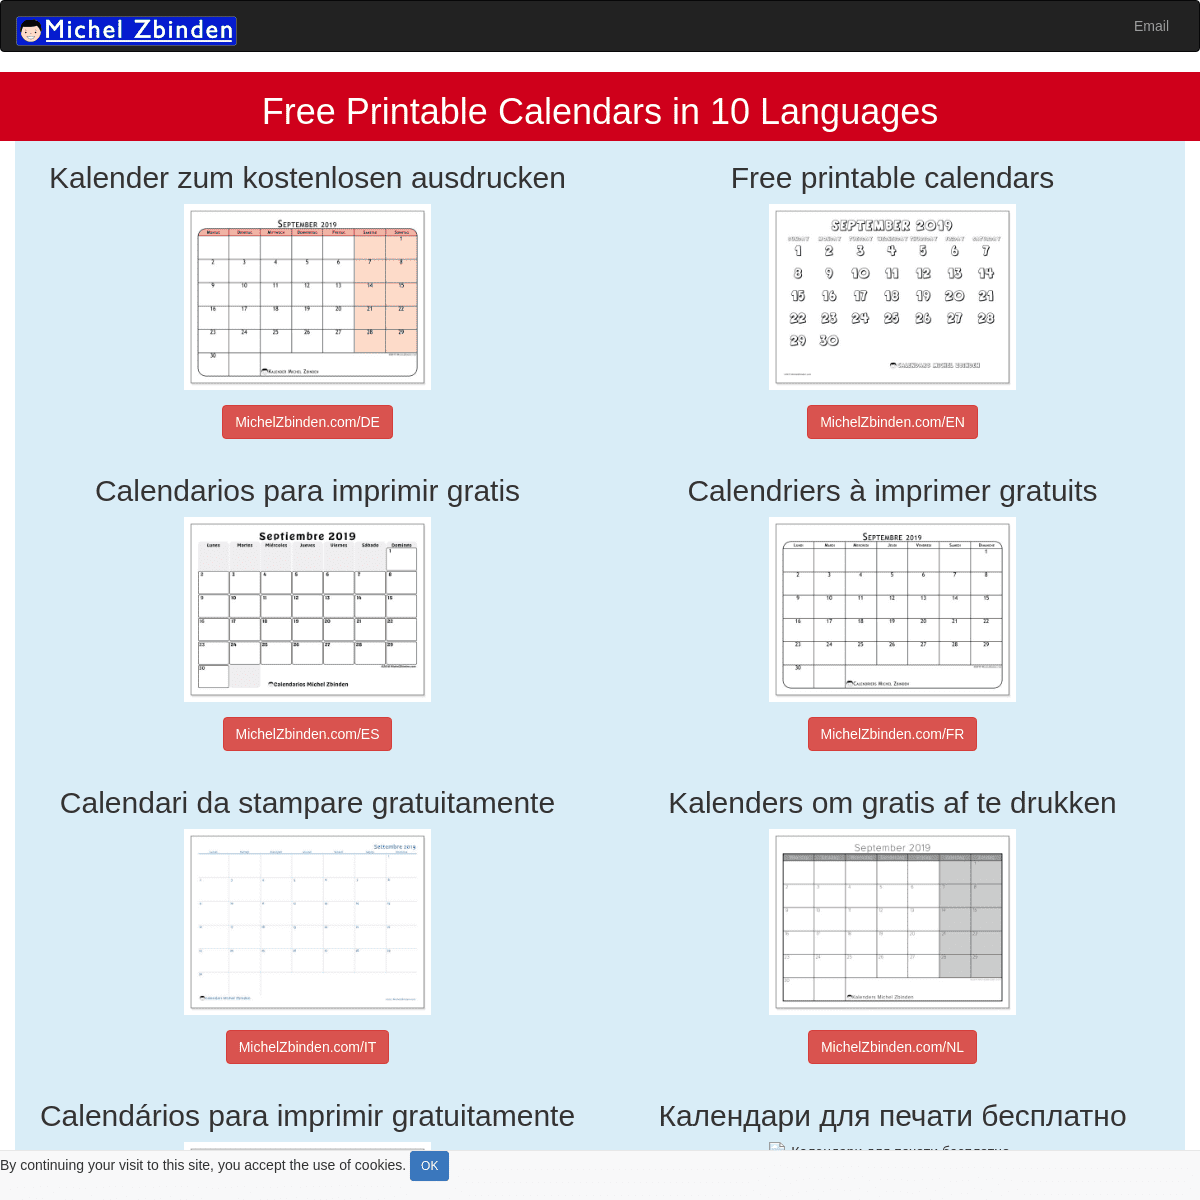 Free printable calendars in 10 languages